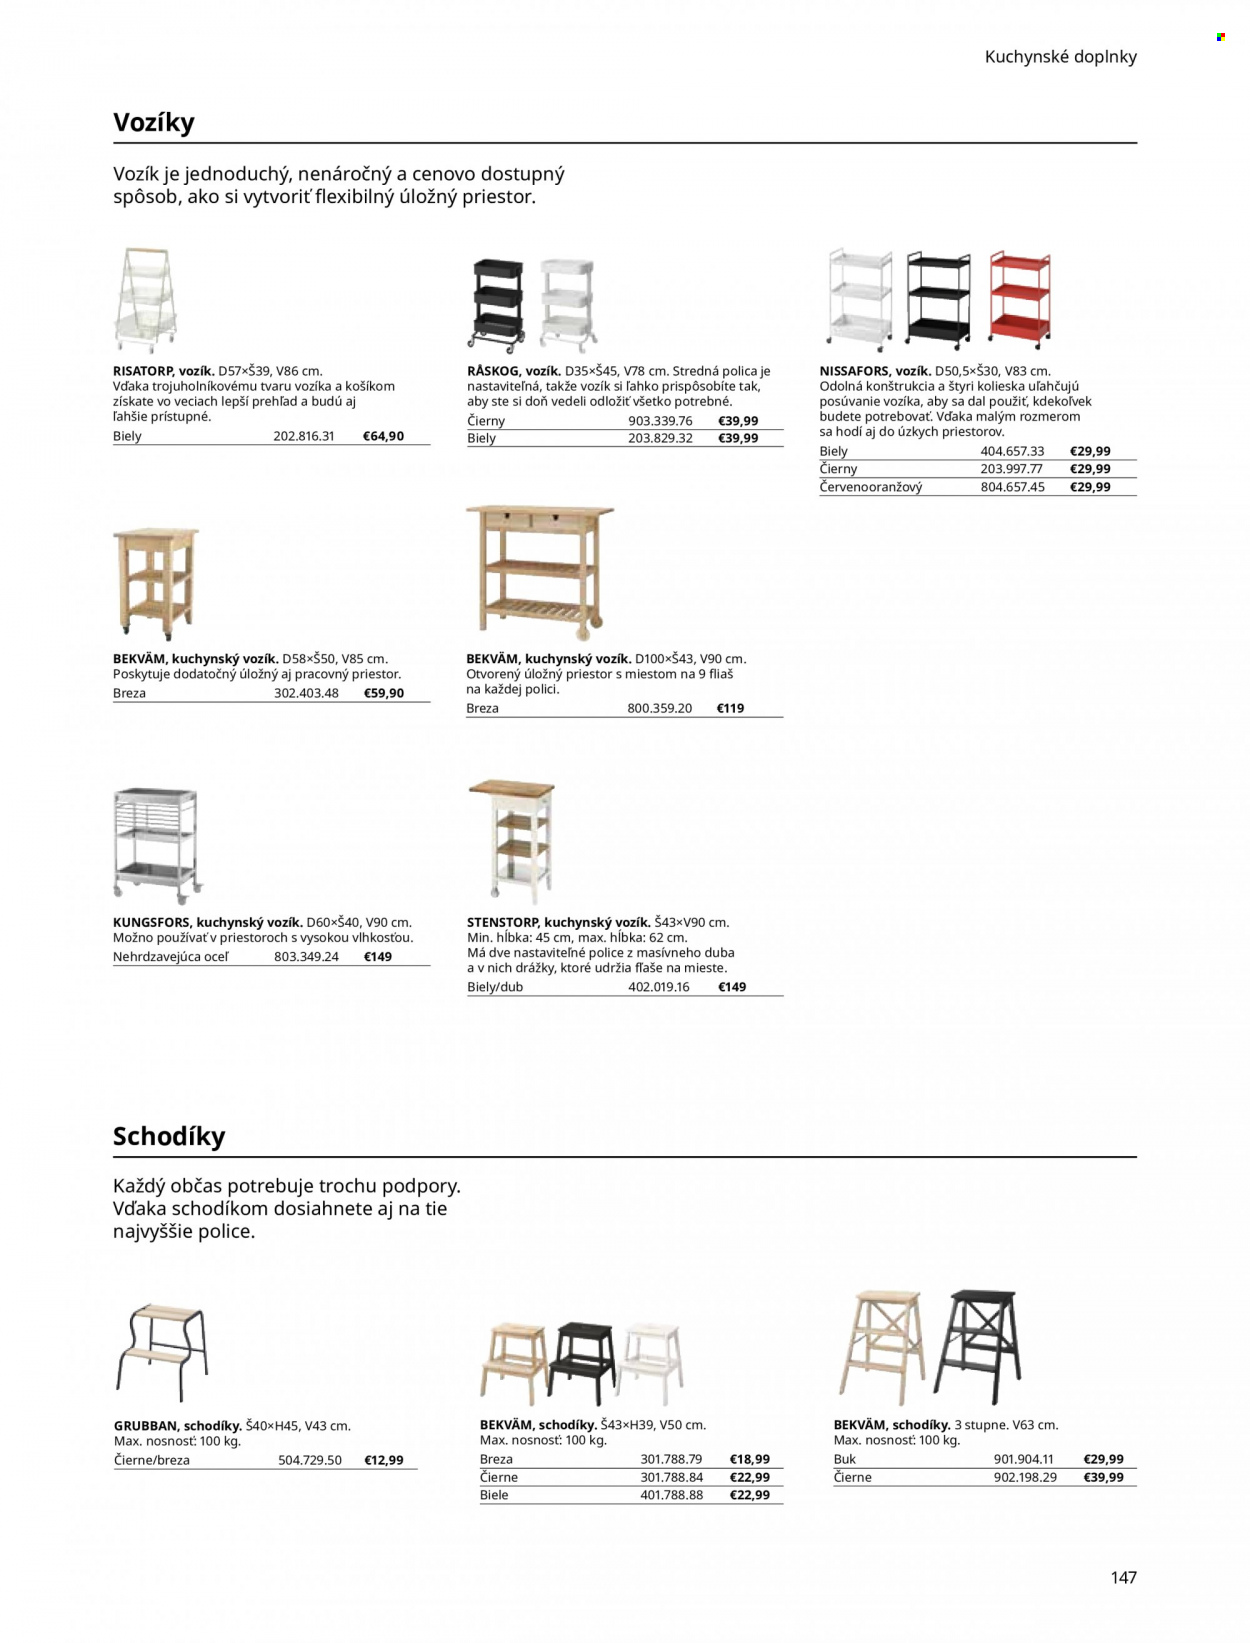 Leták IKEA - Produkty v akcii - kuchynský vozík, hliníkové schodíky. Strana 147.